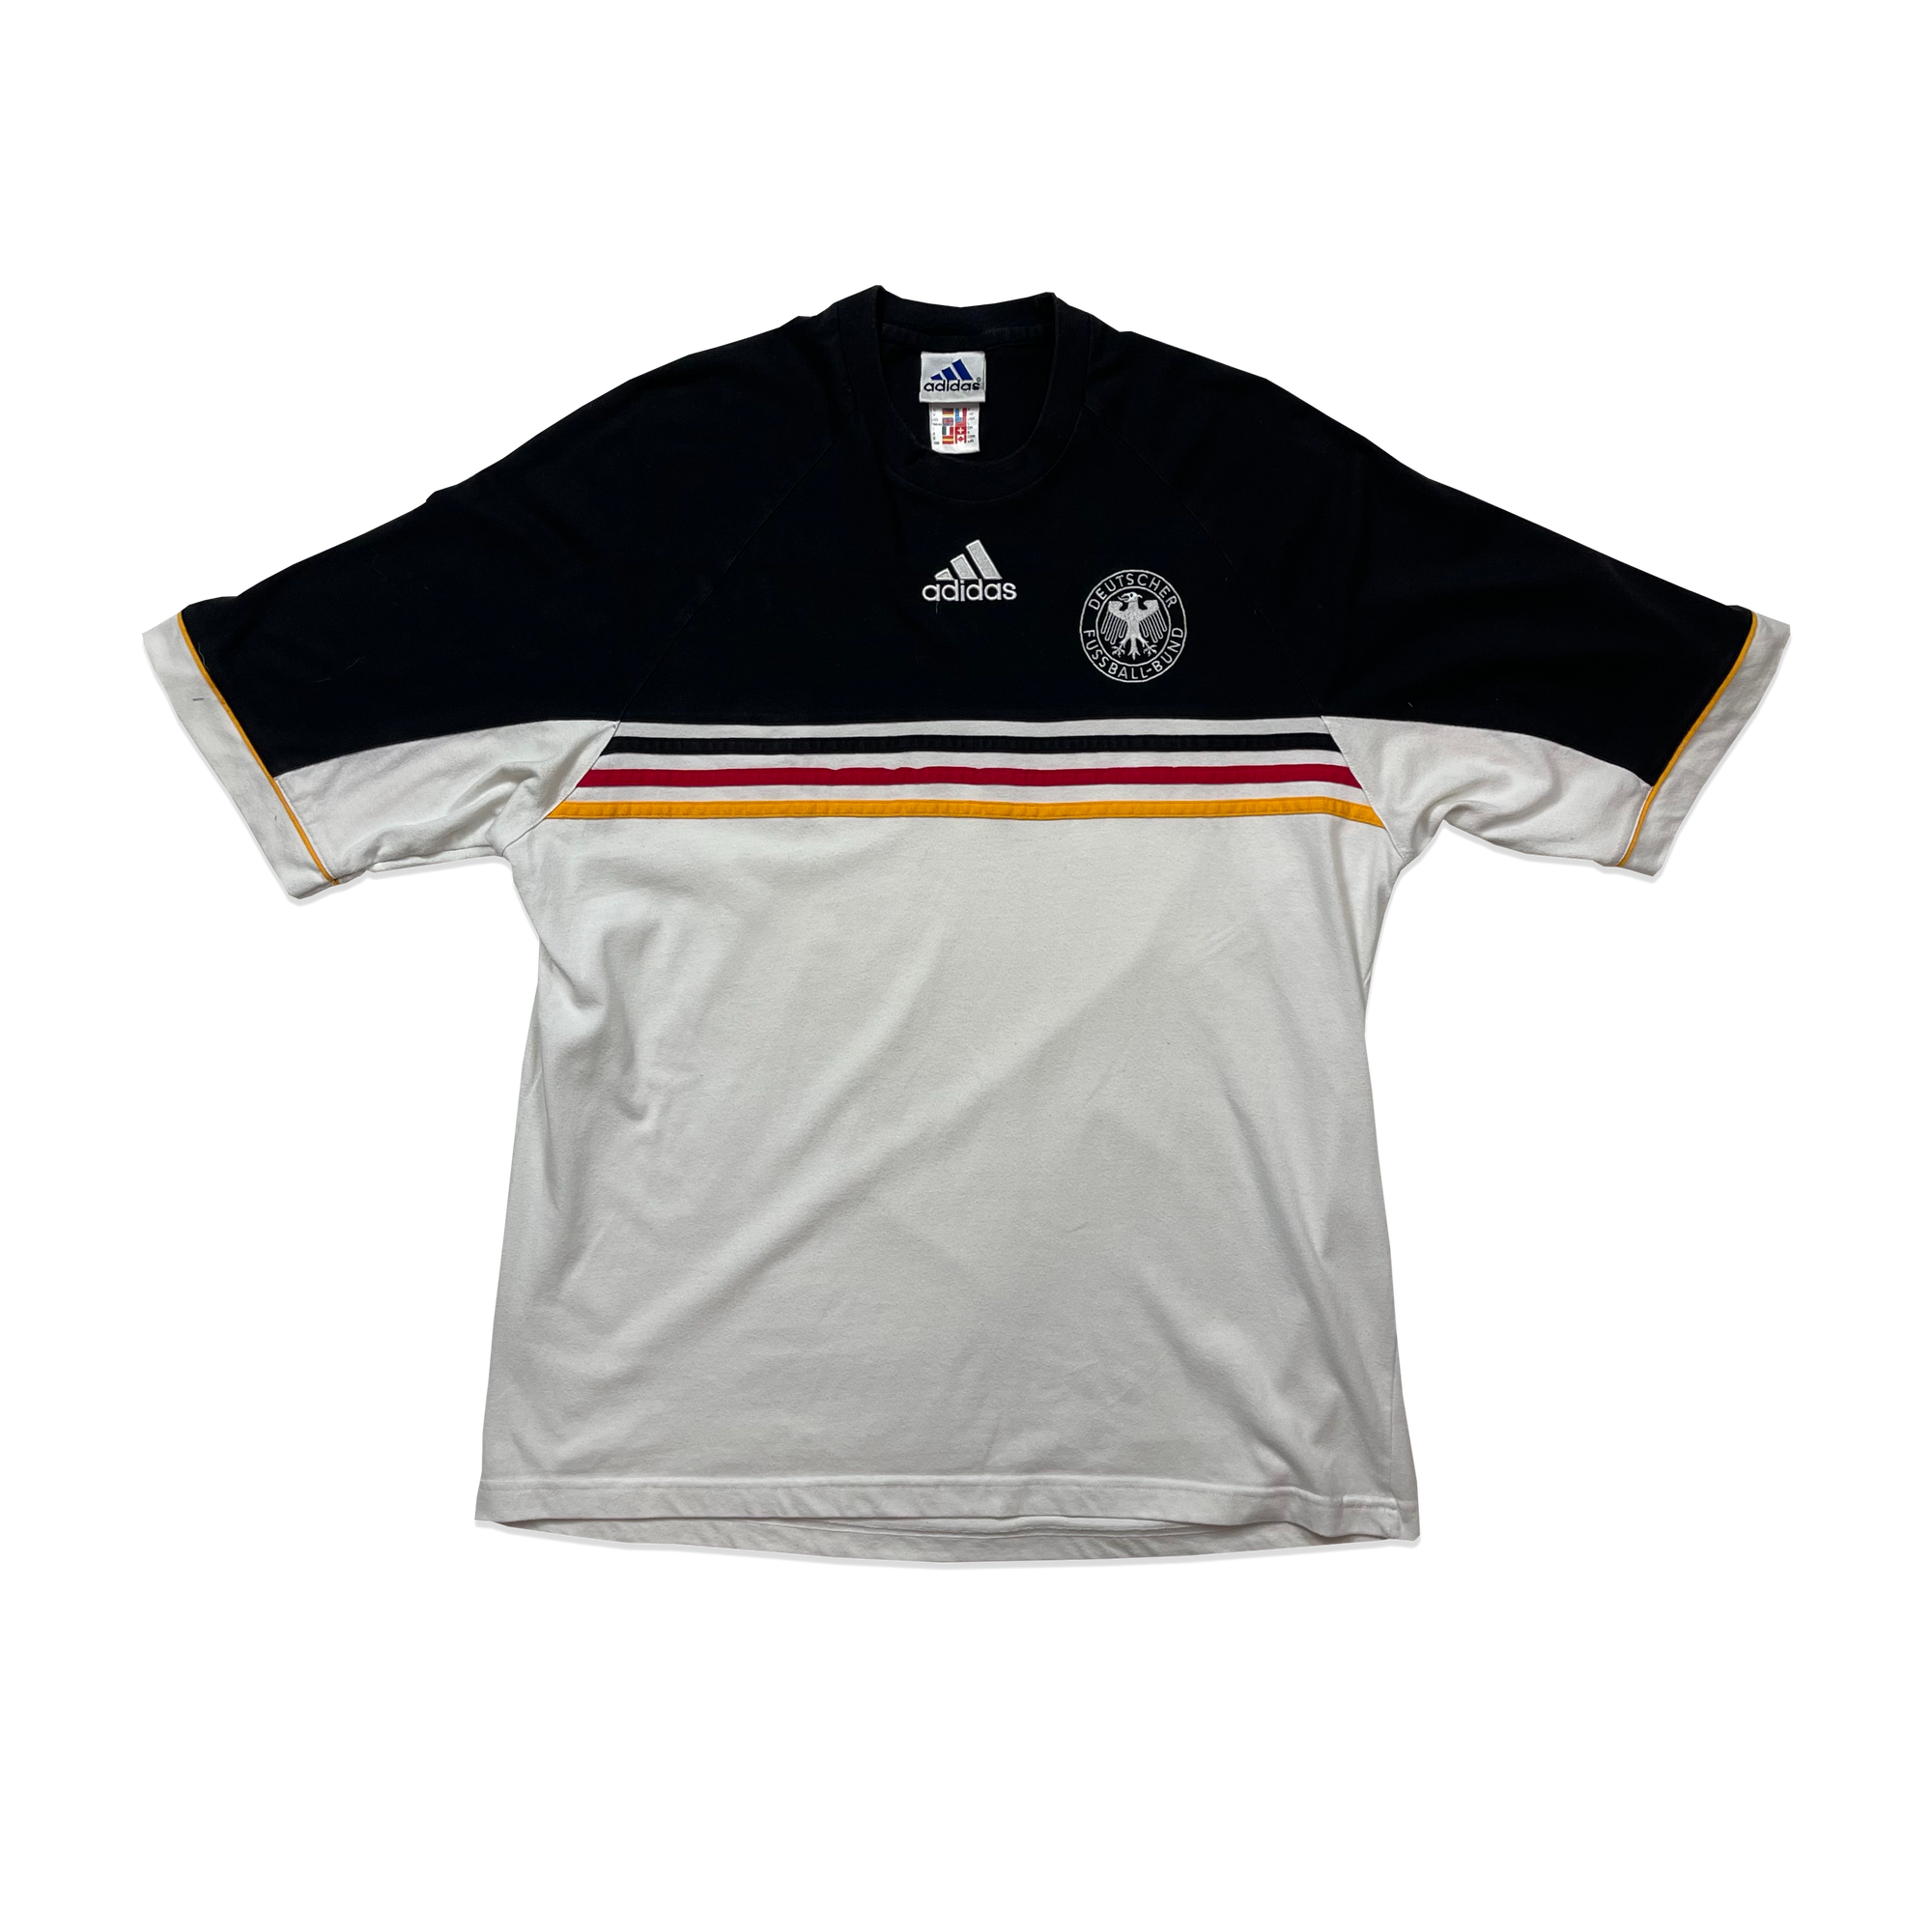 T-shirt Football Allemagne - Adidas - Blanc